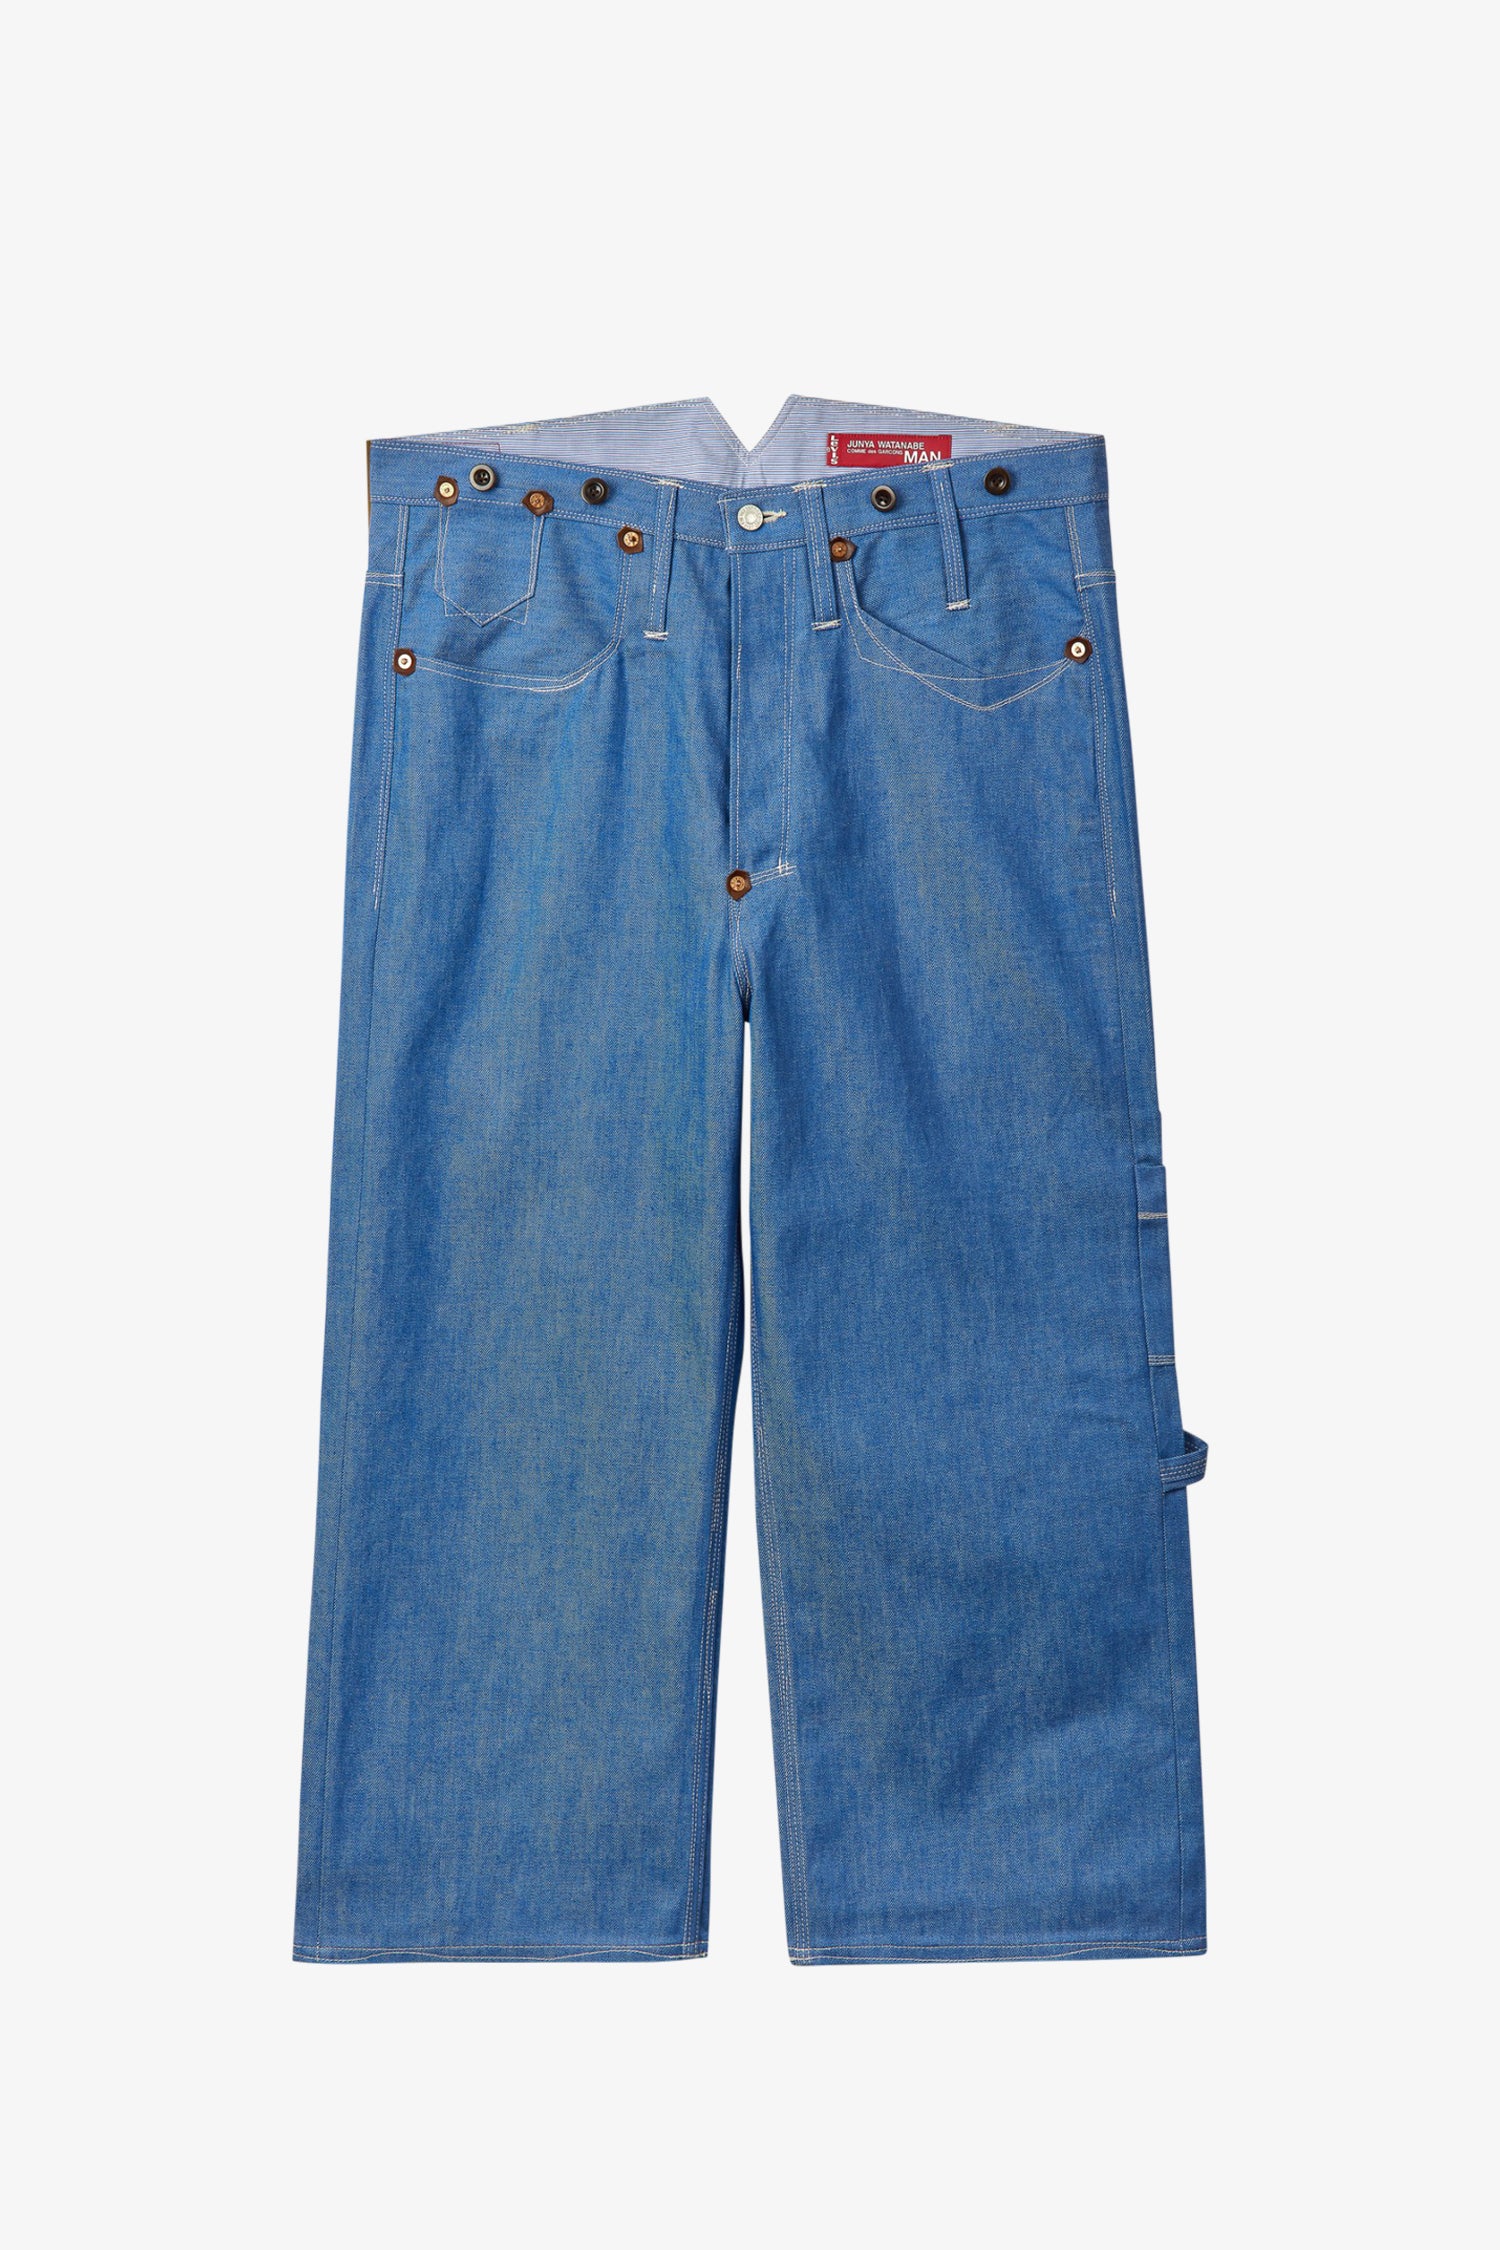 Selectshop FRAME - JUNYA WATANABE MAN Levis Resin Suspender Jeans Bottoms Dubai